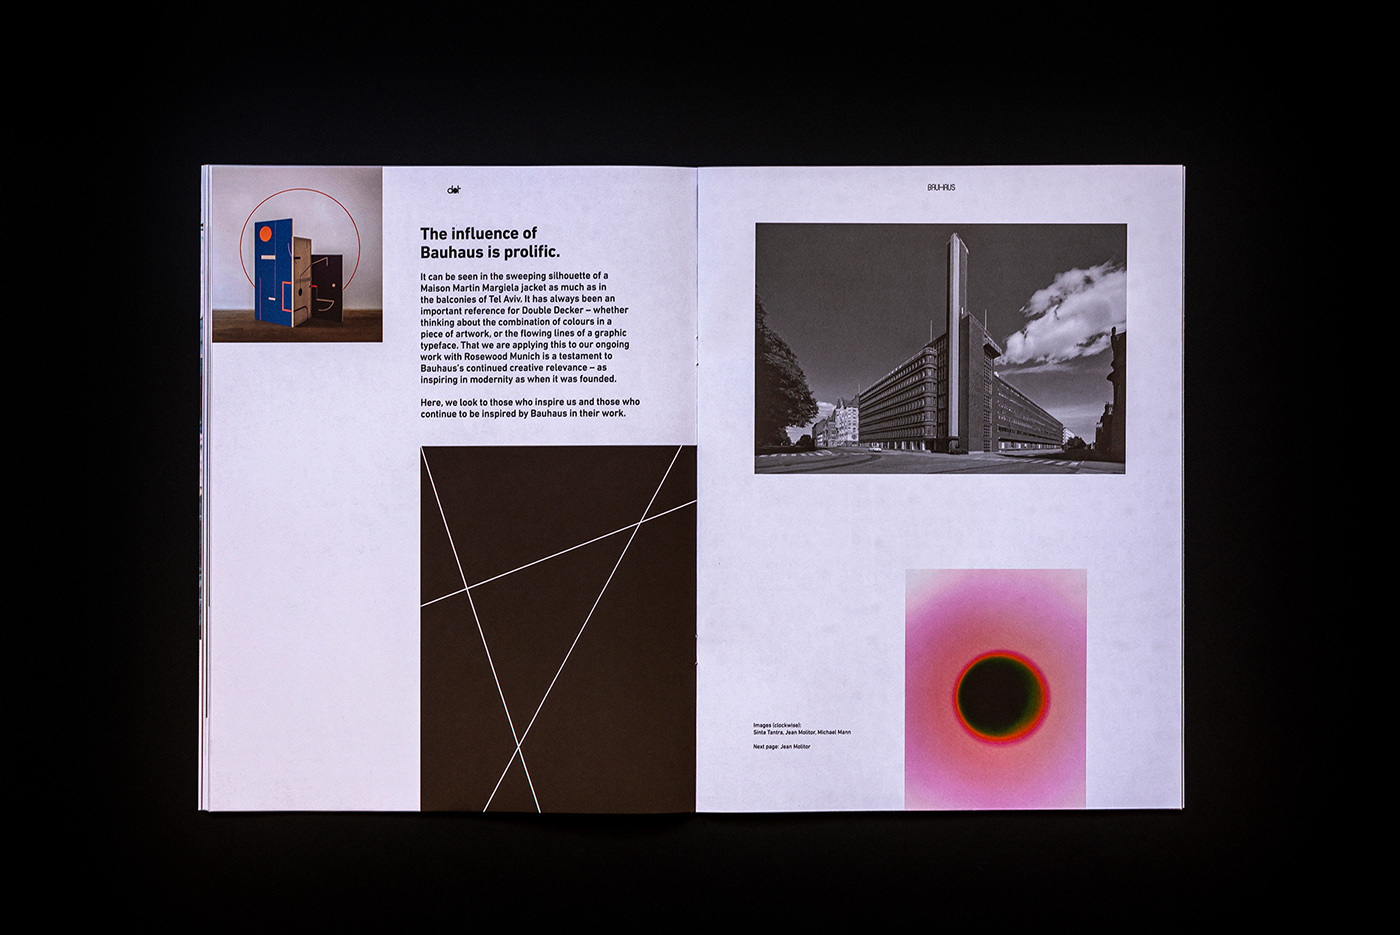 Bauhaus featured article spread